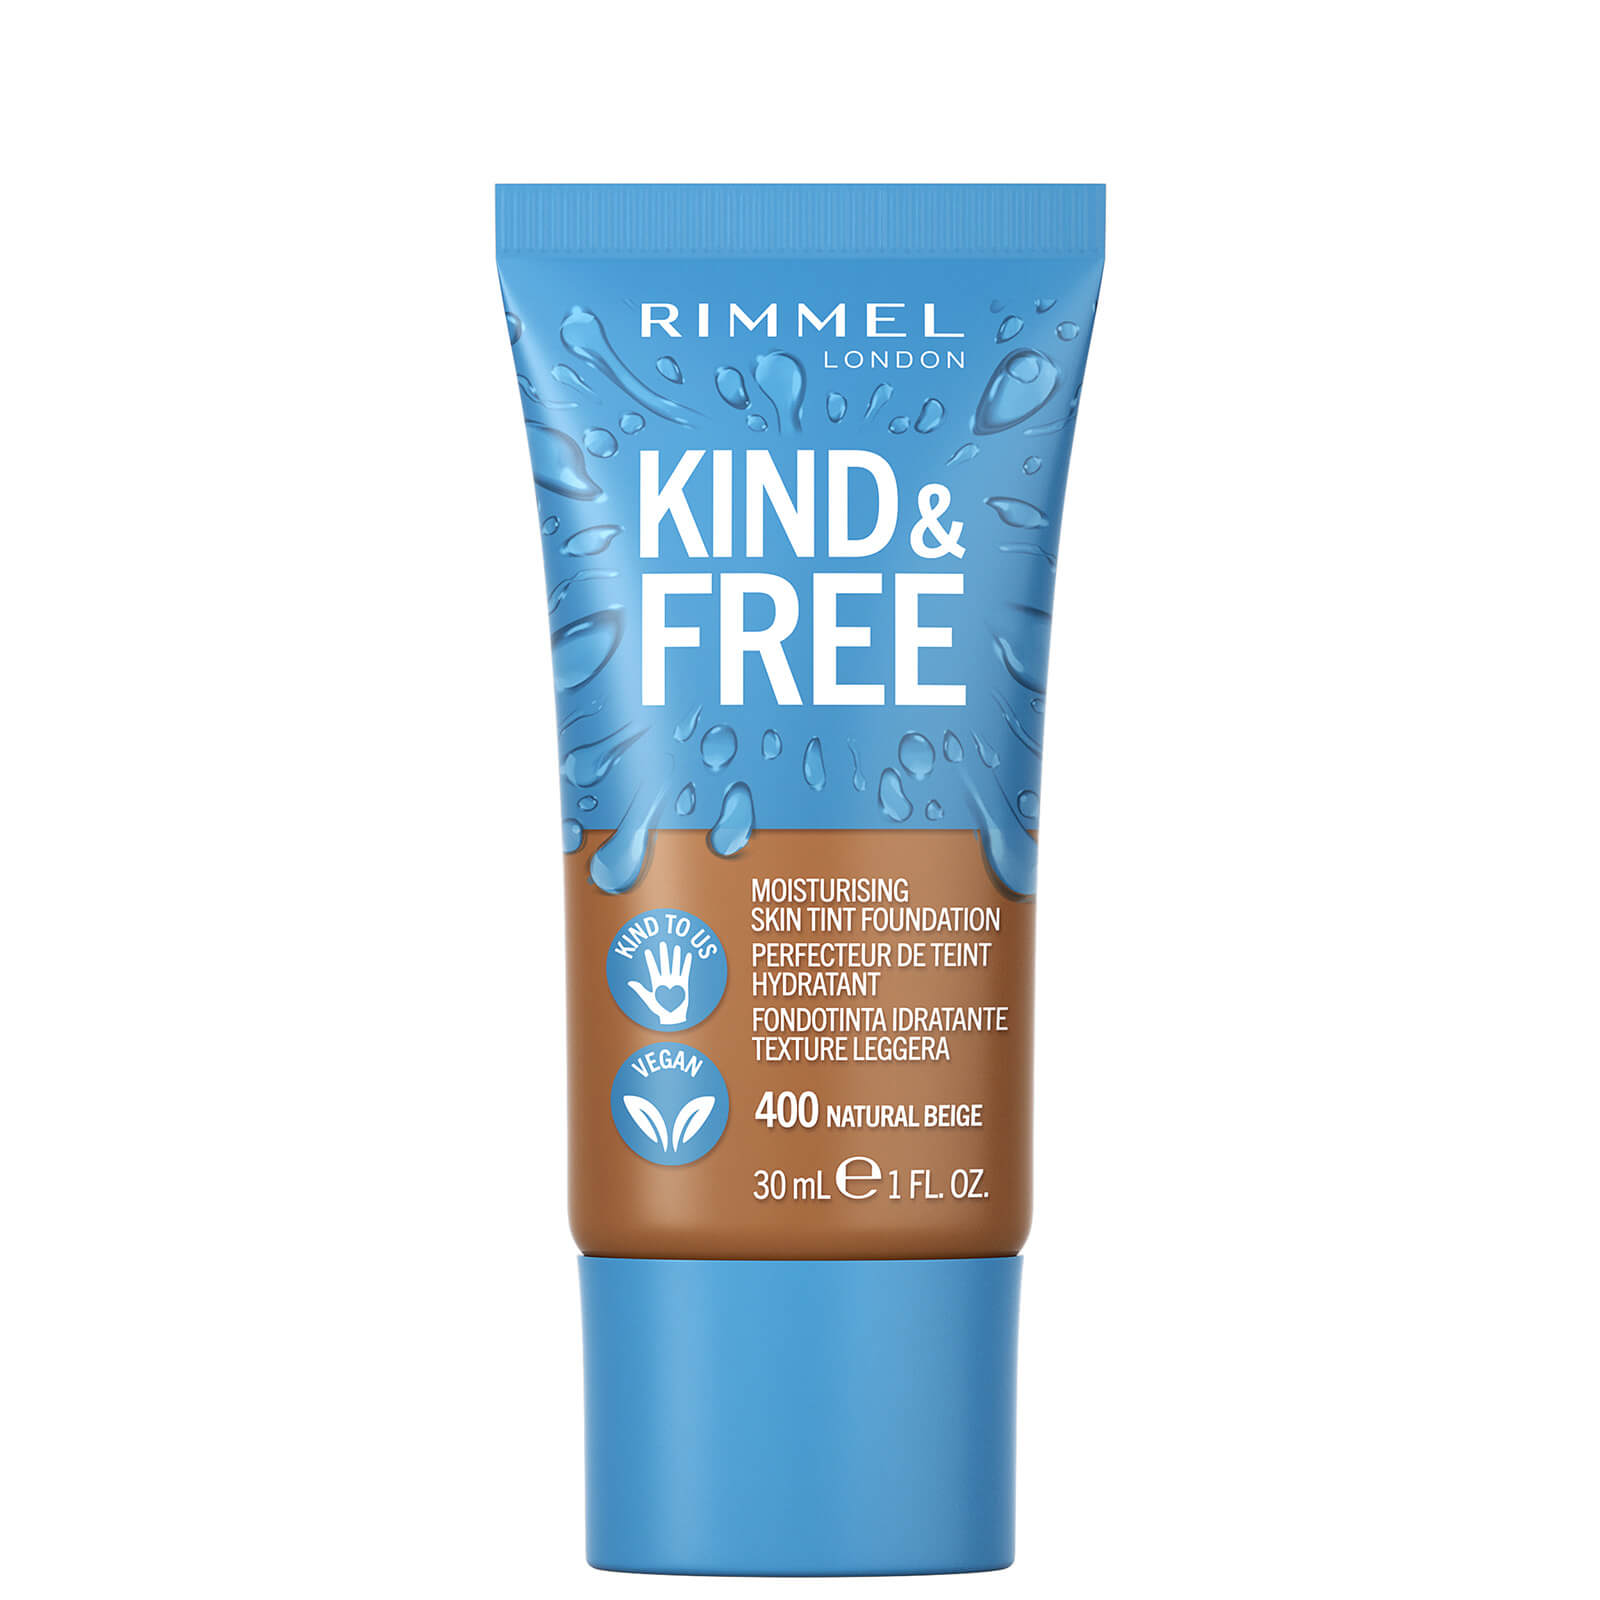 Rimmel Kind and Free Skin Tint Moisturising Foundation 30ml (Various Shades) - Natural Beige